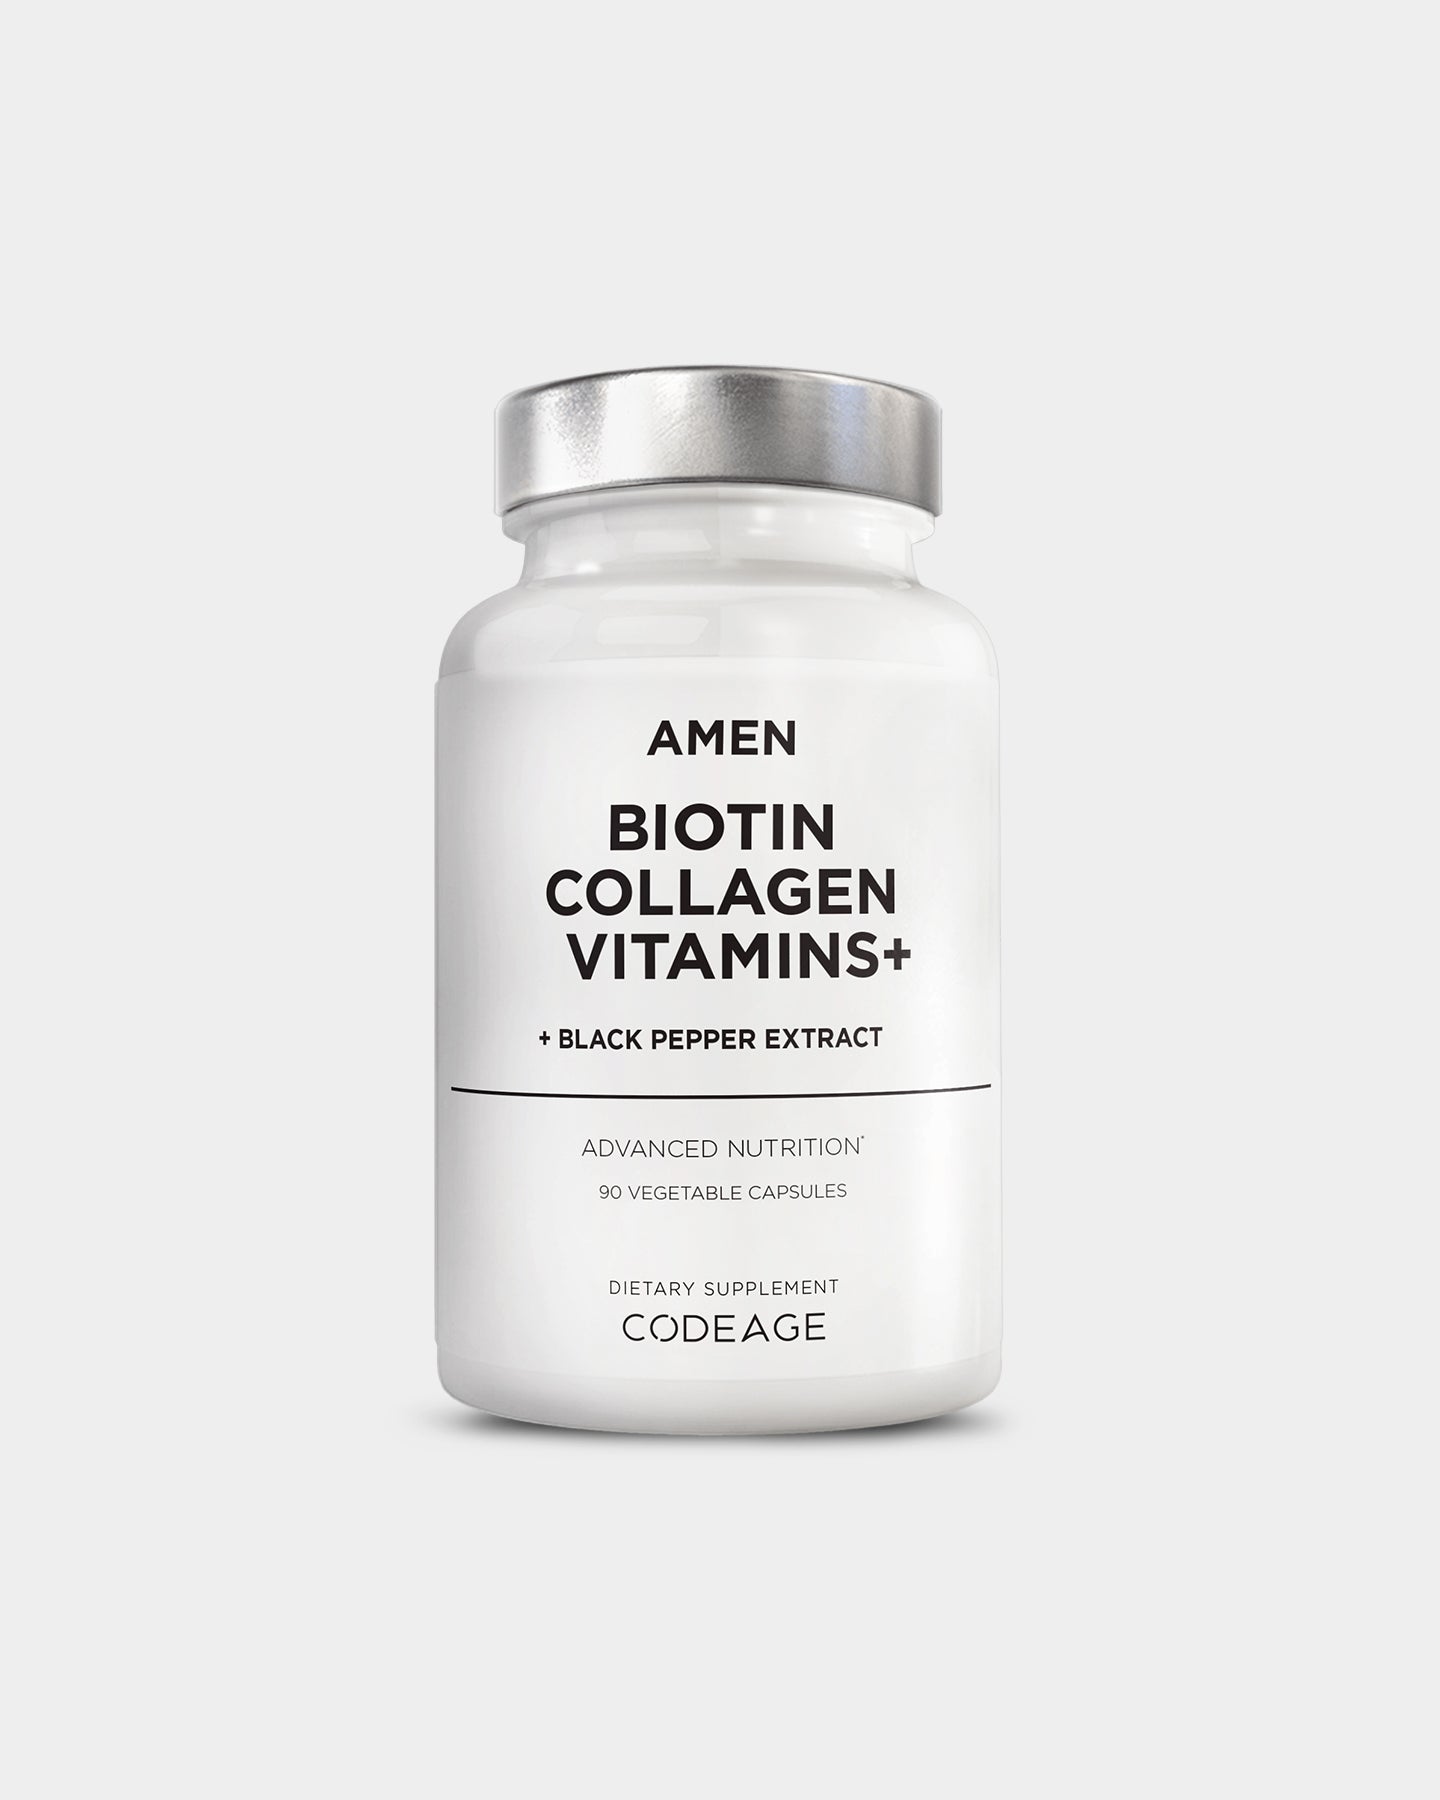 Codeage Amen Biotin Collagen Vitamins + Black Pepper Extract Main